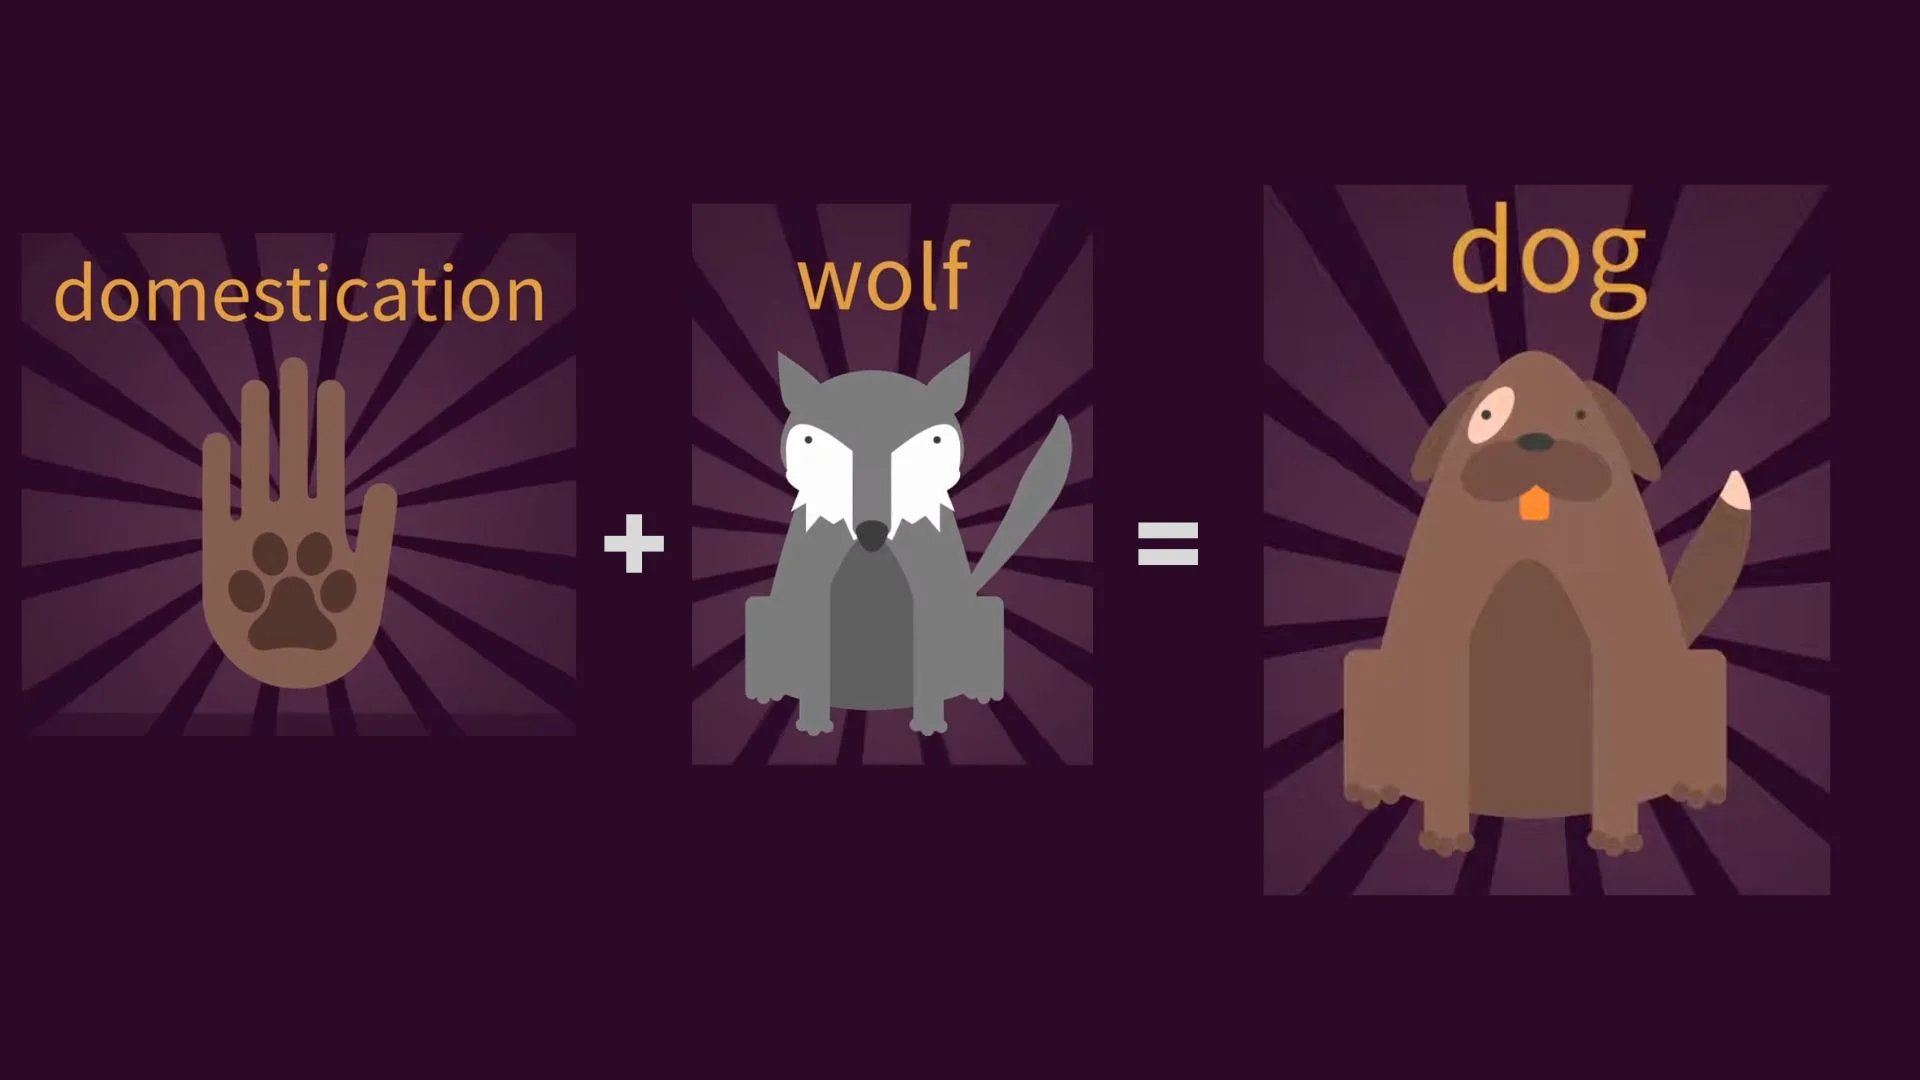 wolf - Little Alchemy 2 Cheats